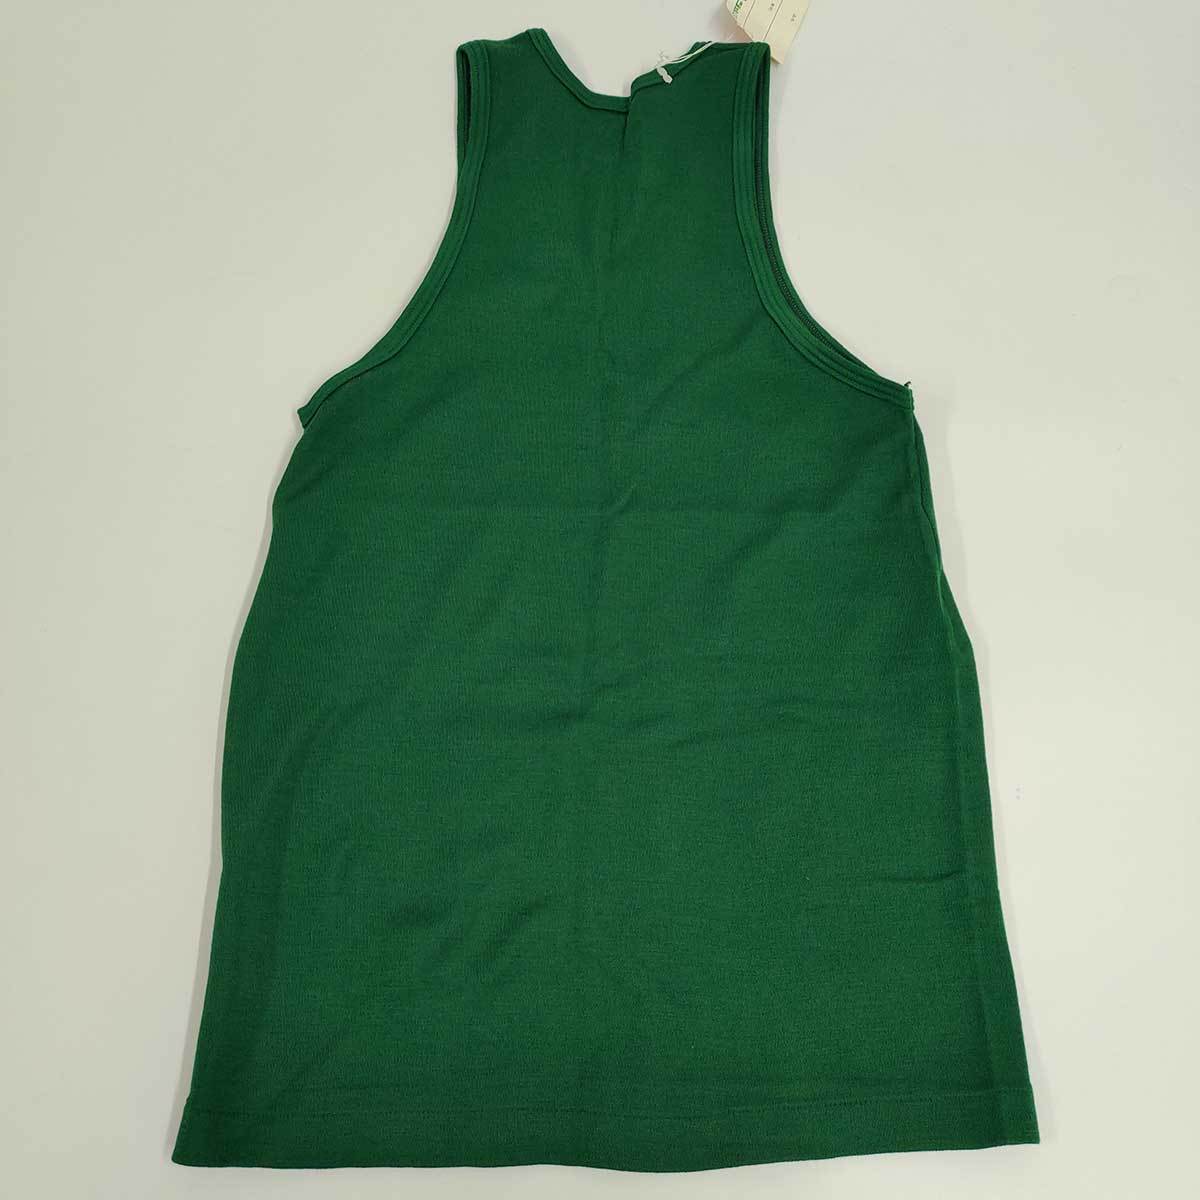 [ used ] Asics je Len k running shirt M green unisex jersey retro tank top 